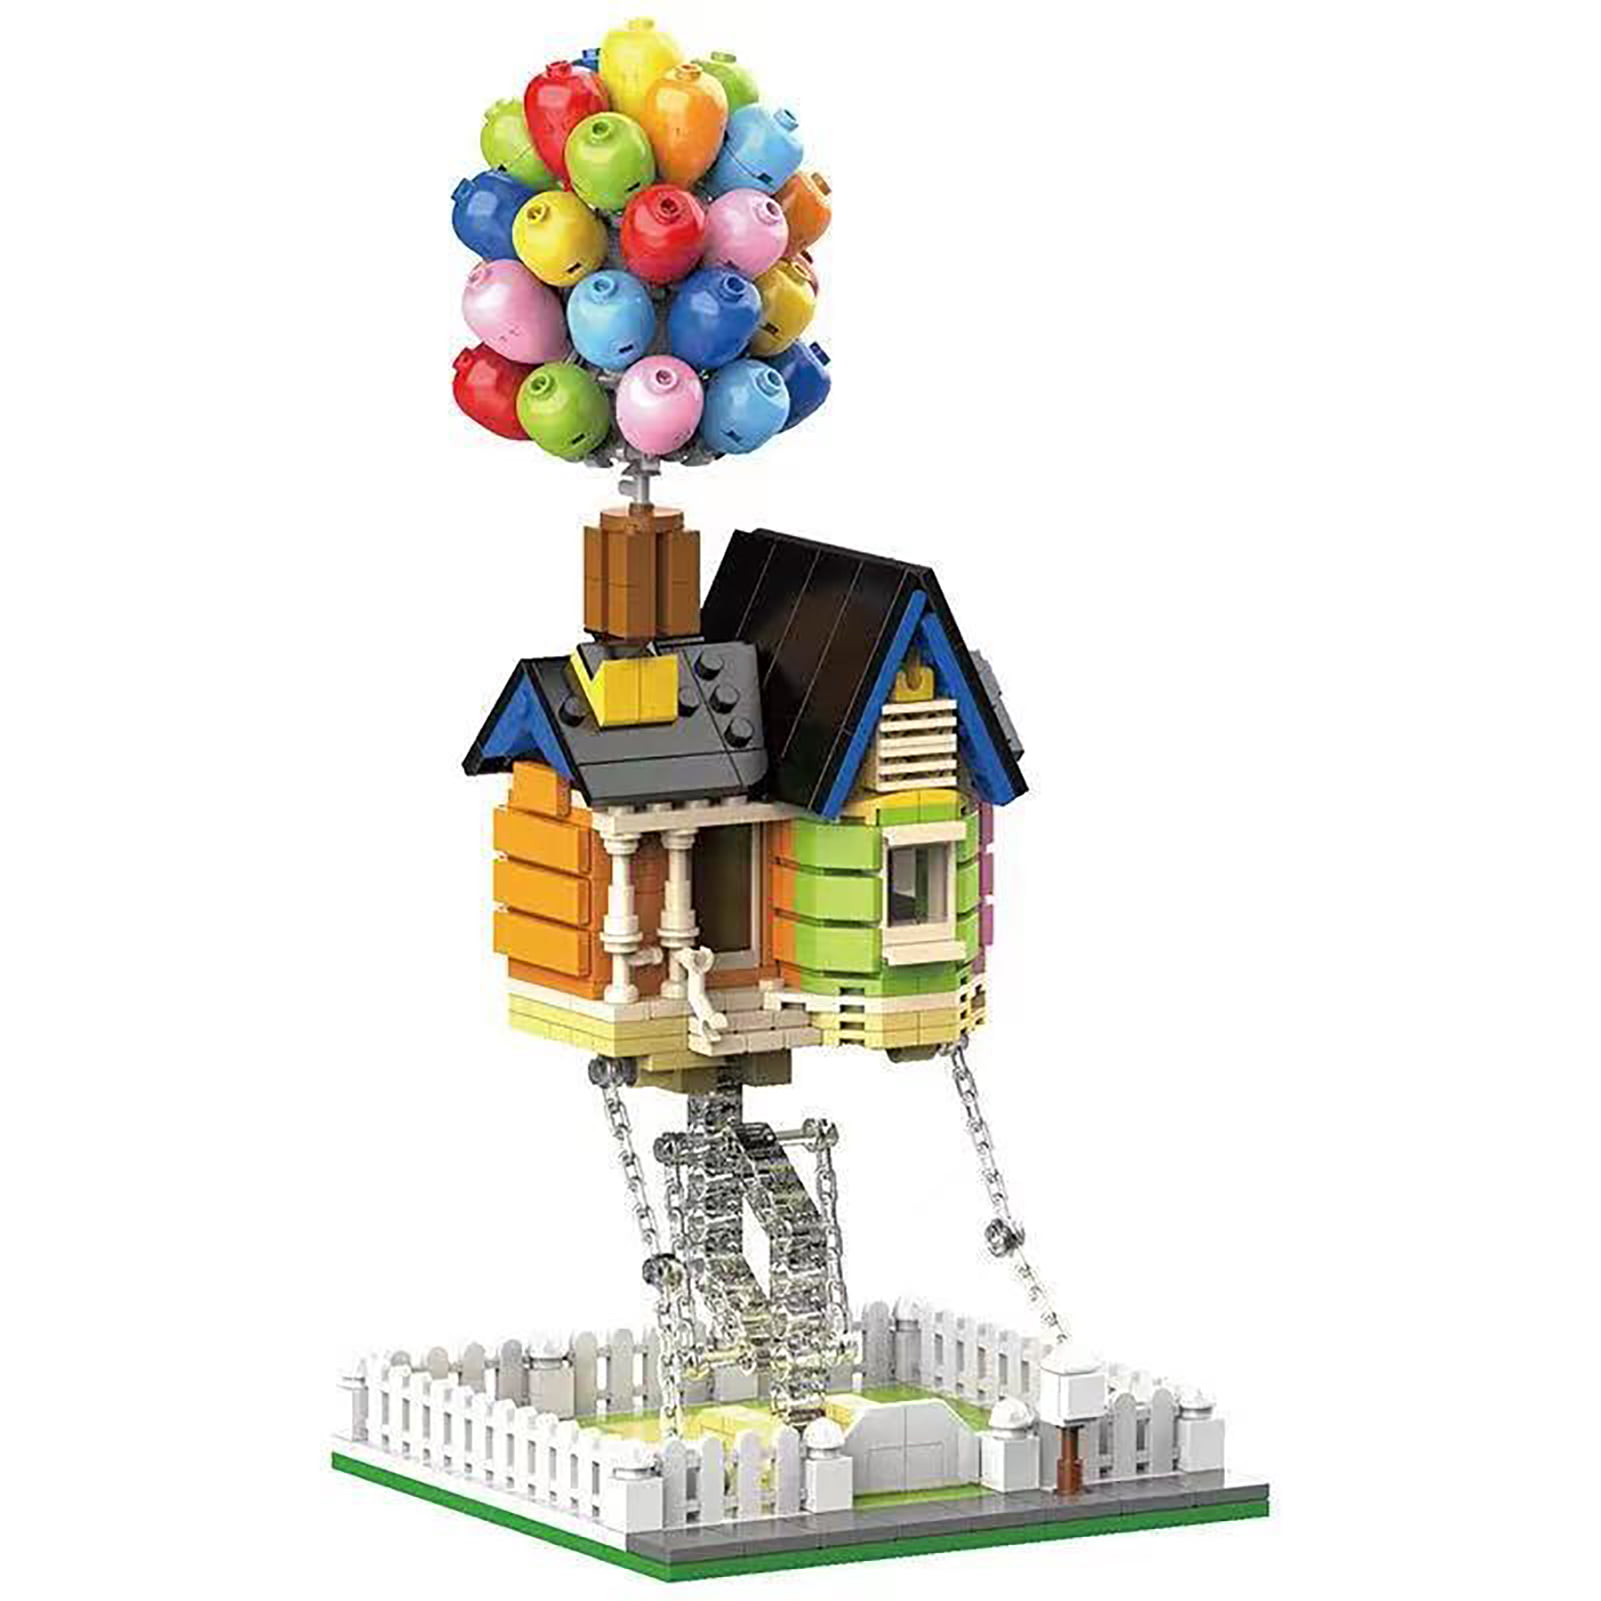 Details about   Building Blocks Kit Modular Balloon House Model Balance Frame Toys for Kids 